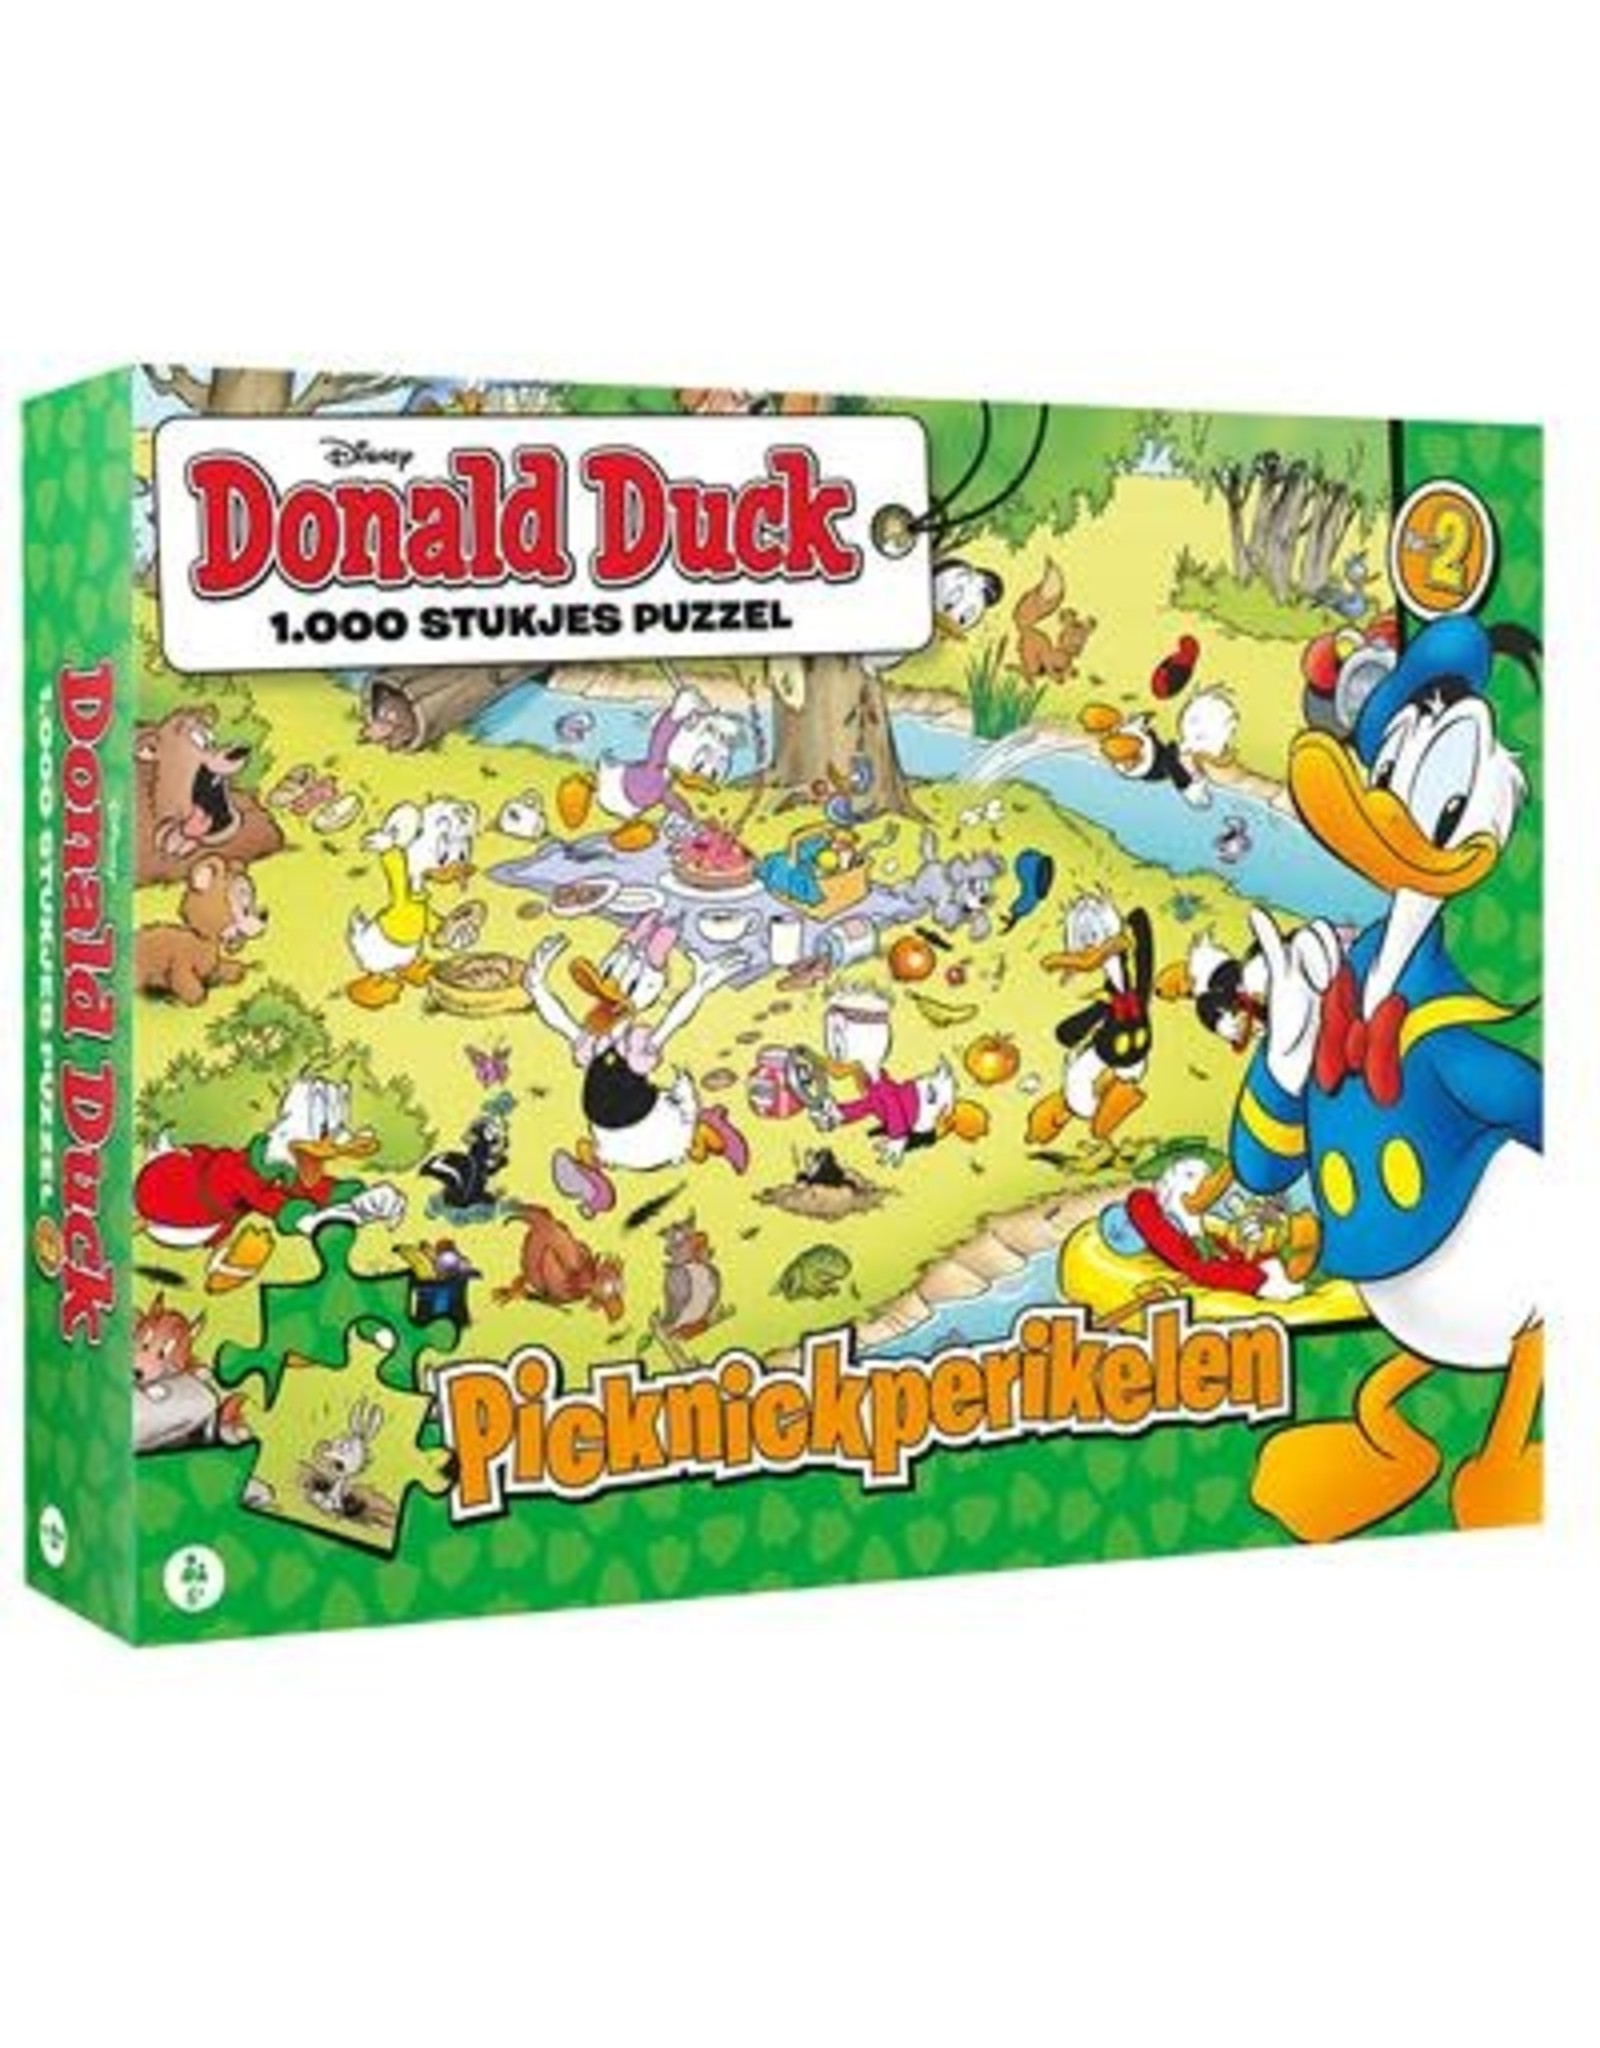 Just Games Puzzel 87403 Donald Duck Picknickperikelen: 1000 stukjes